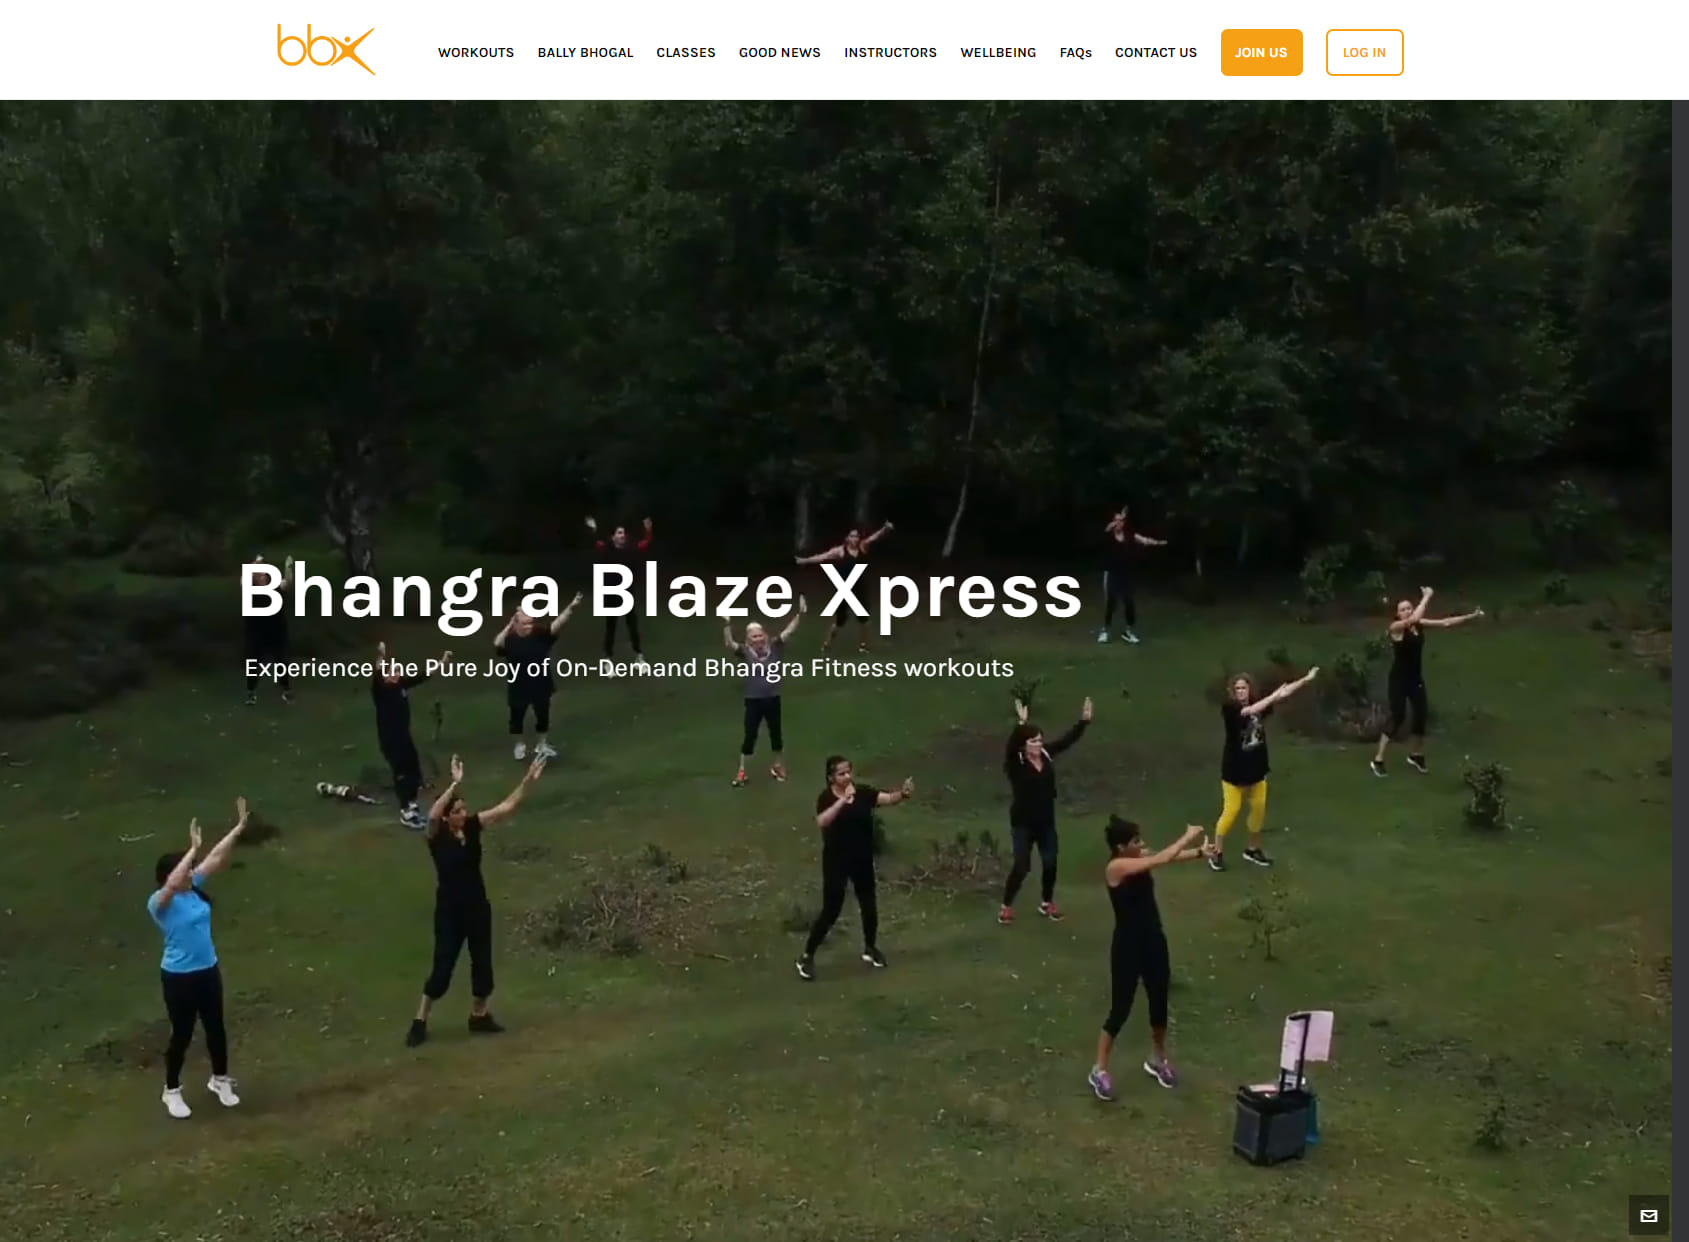 Bhangra Blaze Xpress (BBX)